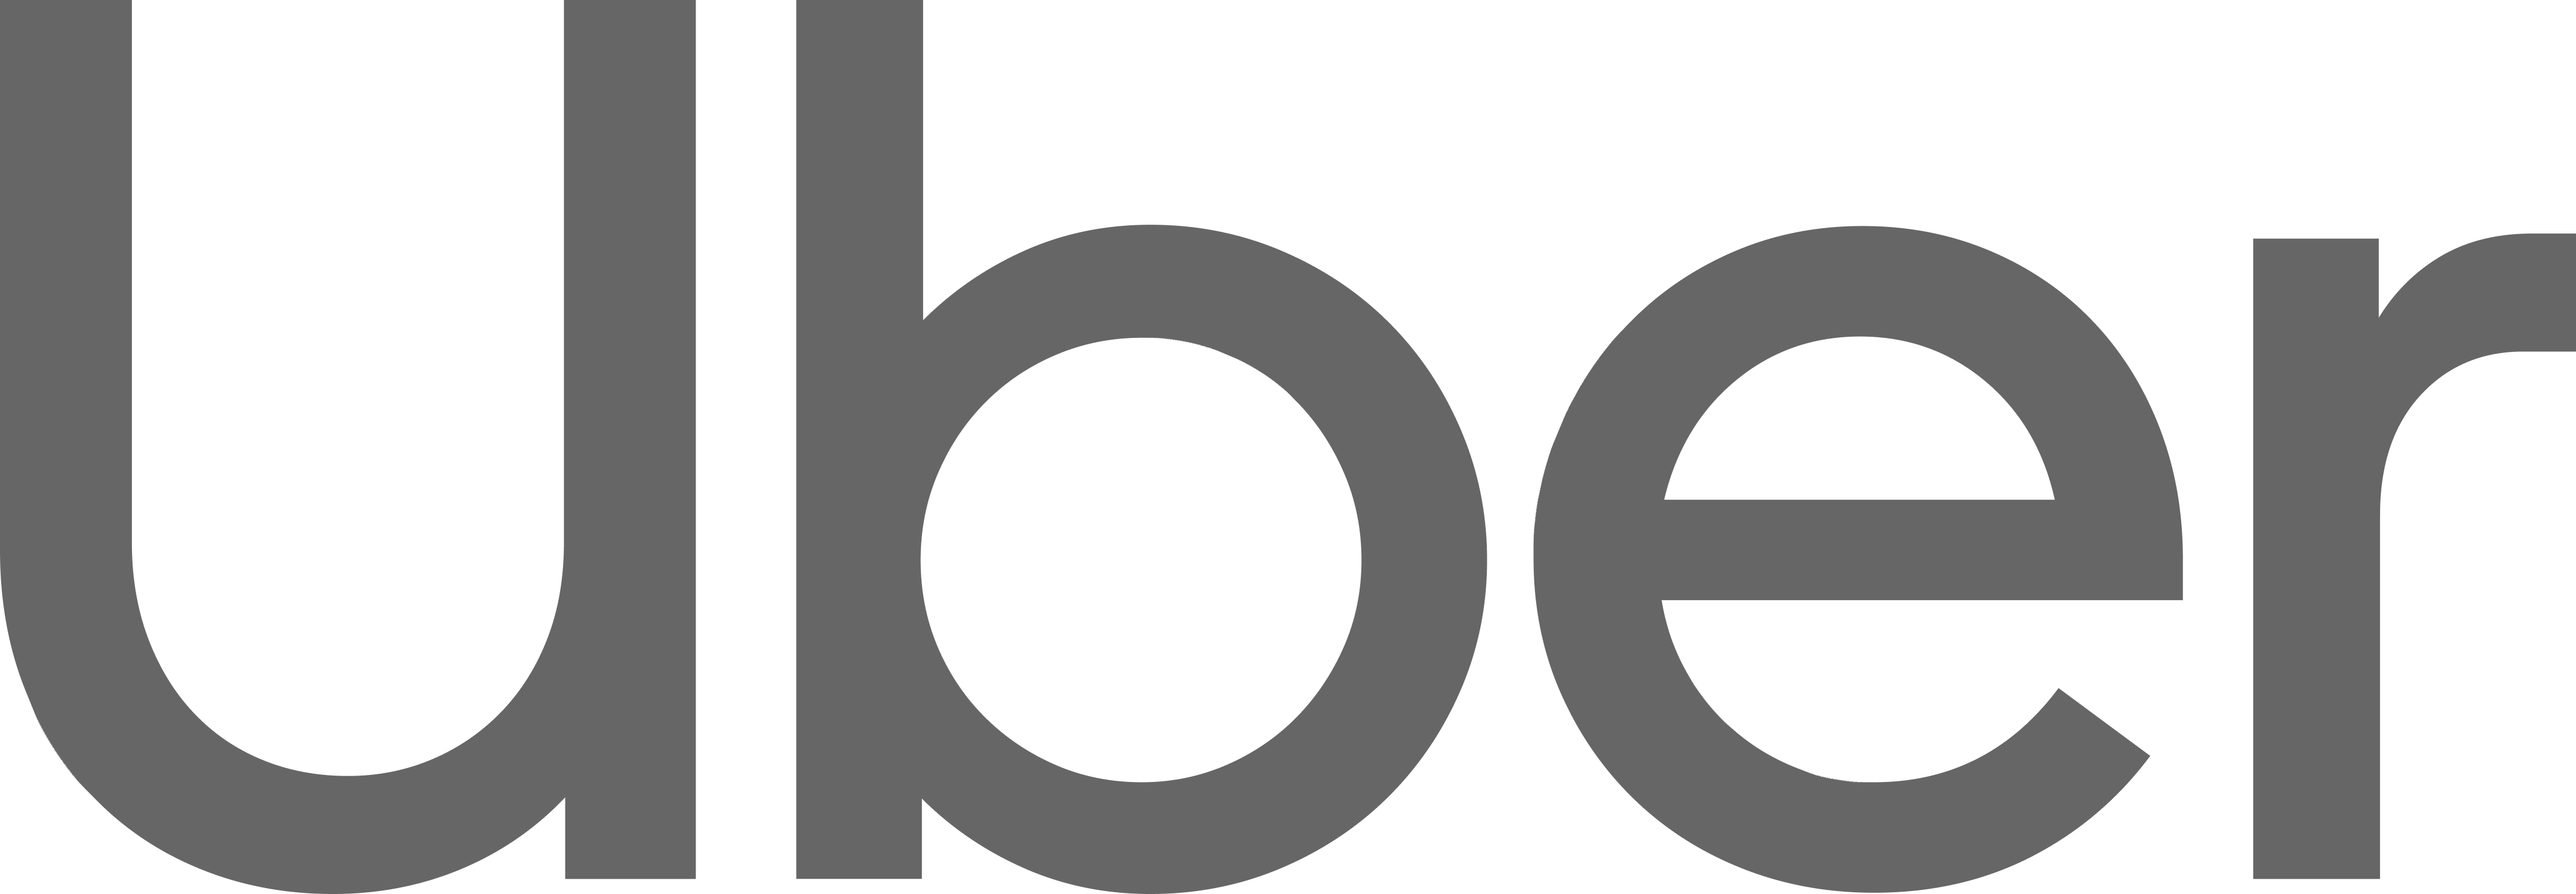 uber logo gray color